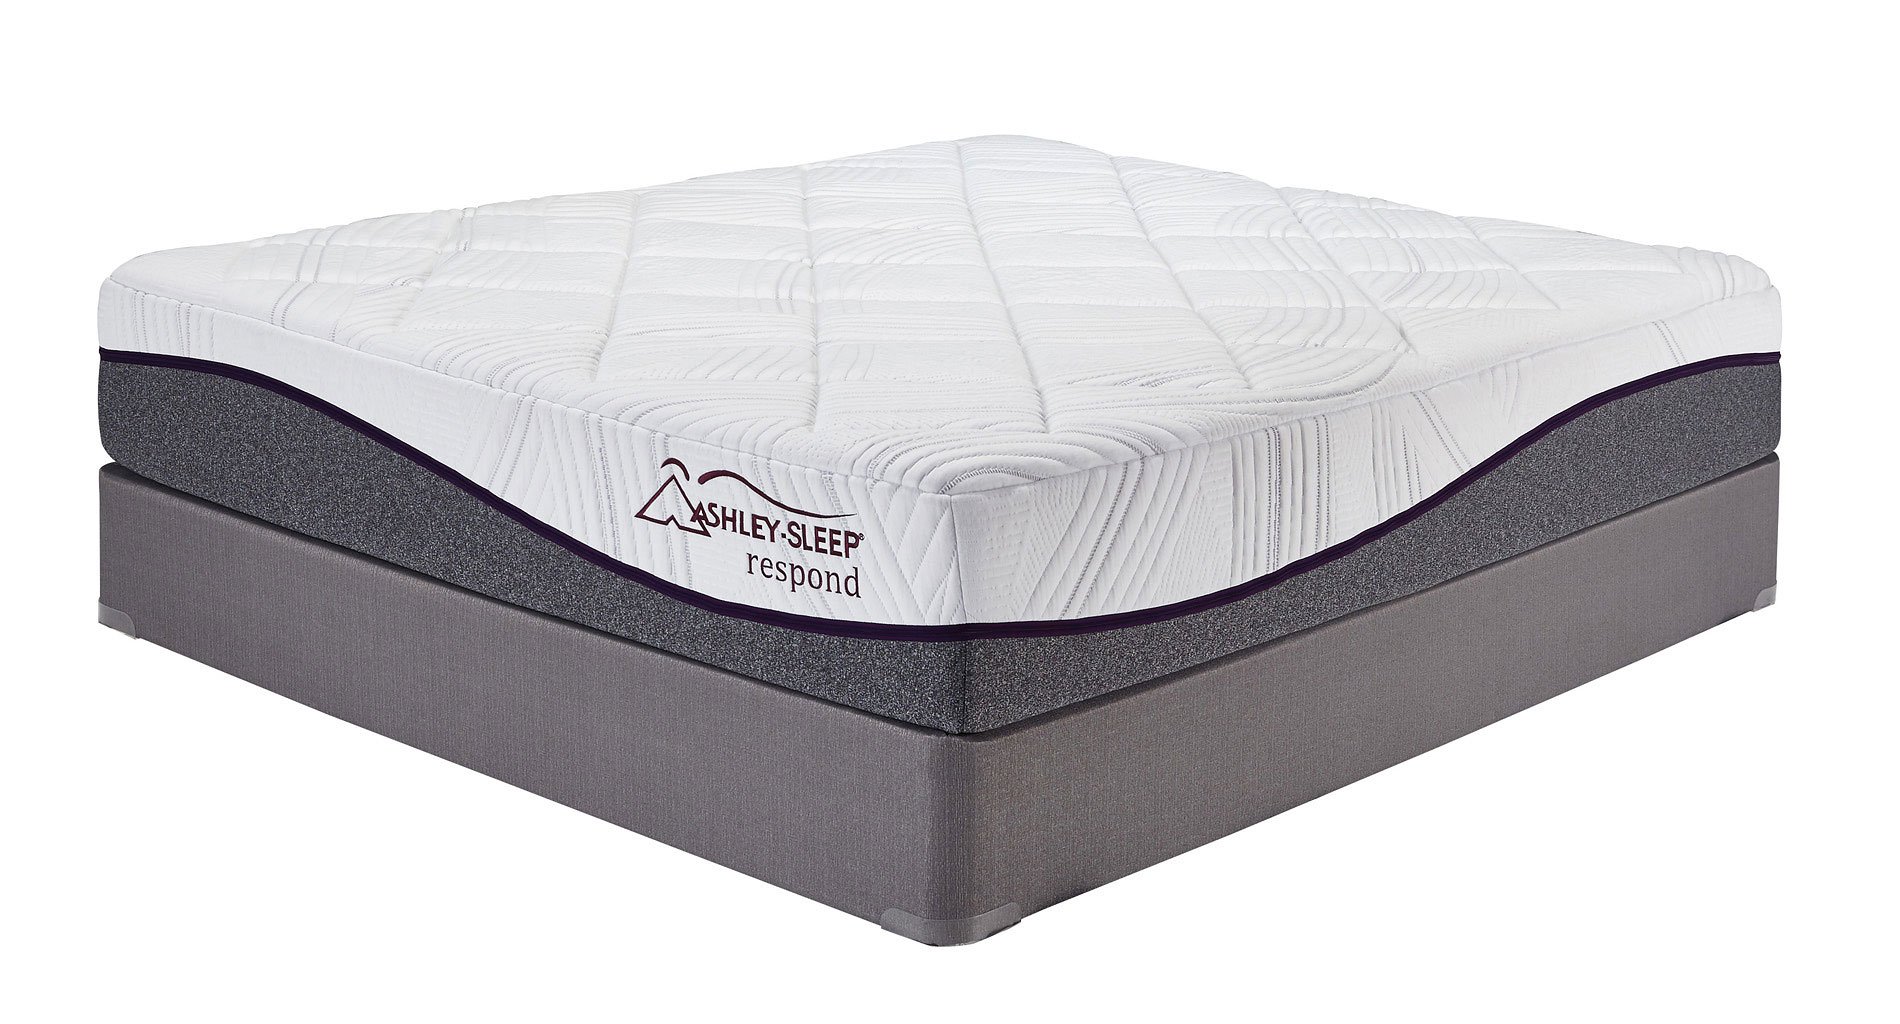 12 inch mattress cover